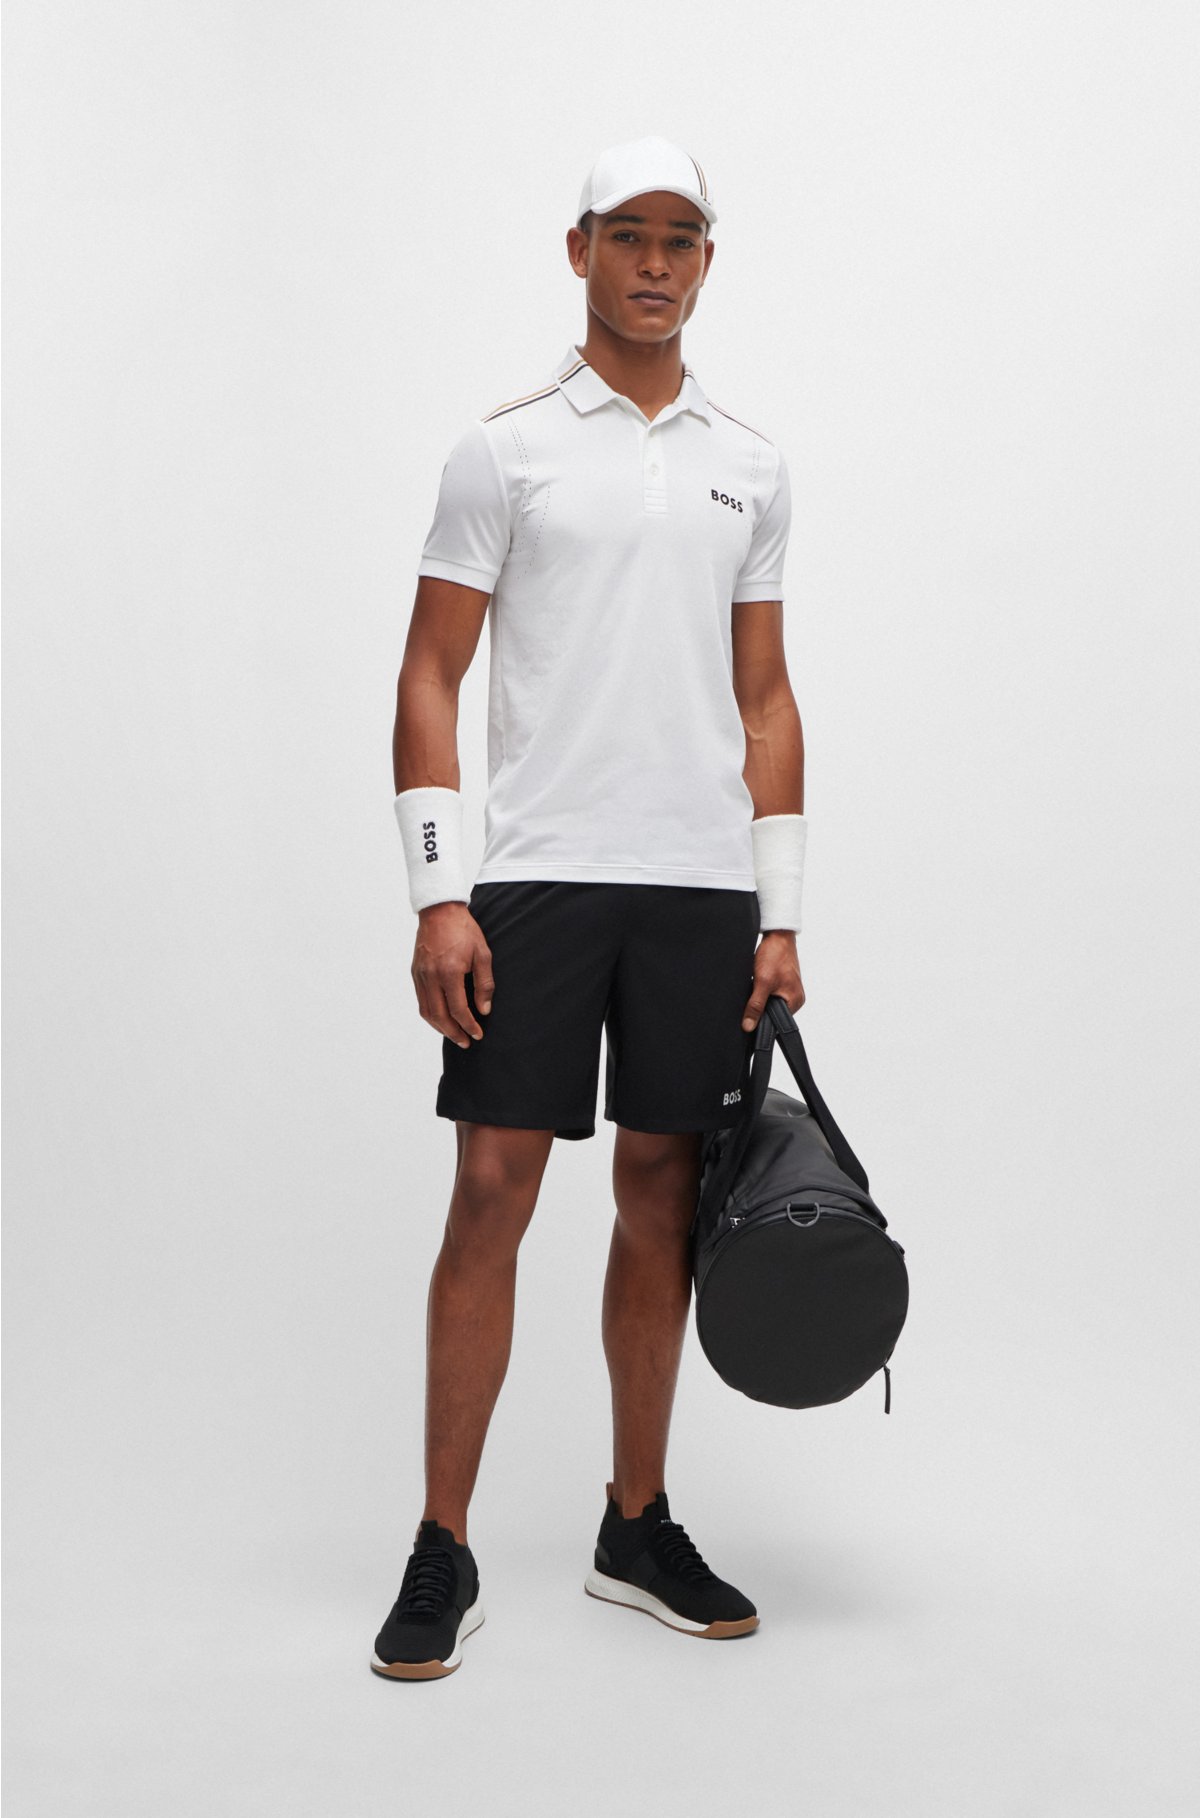 BOSS x Matteo Berrettini slim-fit polo shirt with signature stripes, White